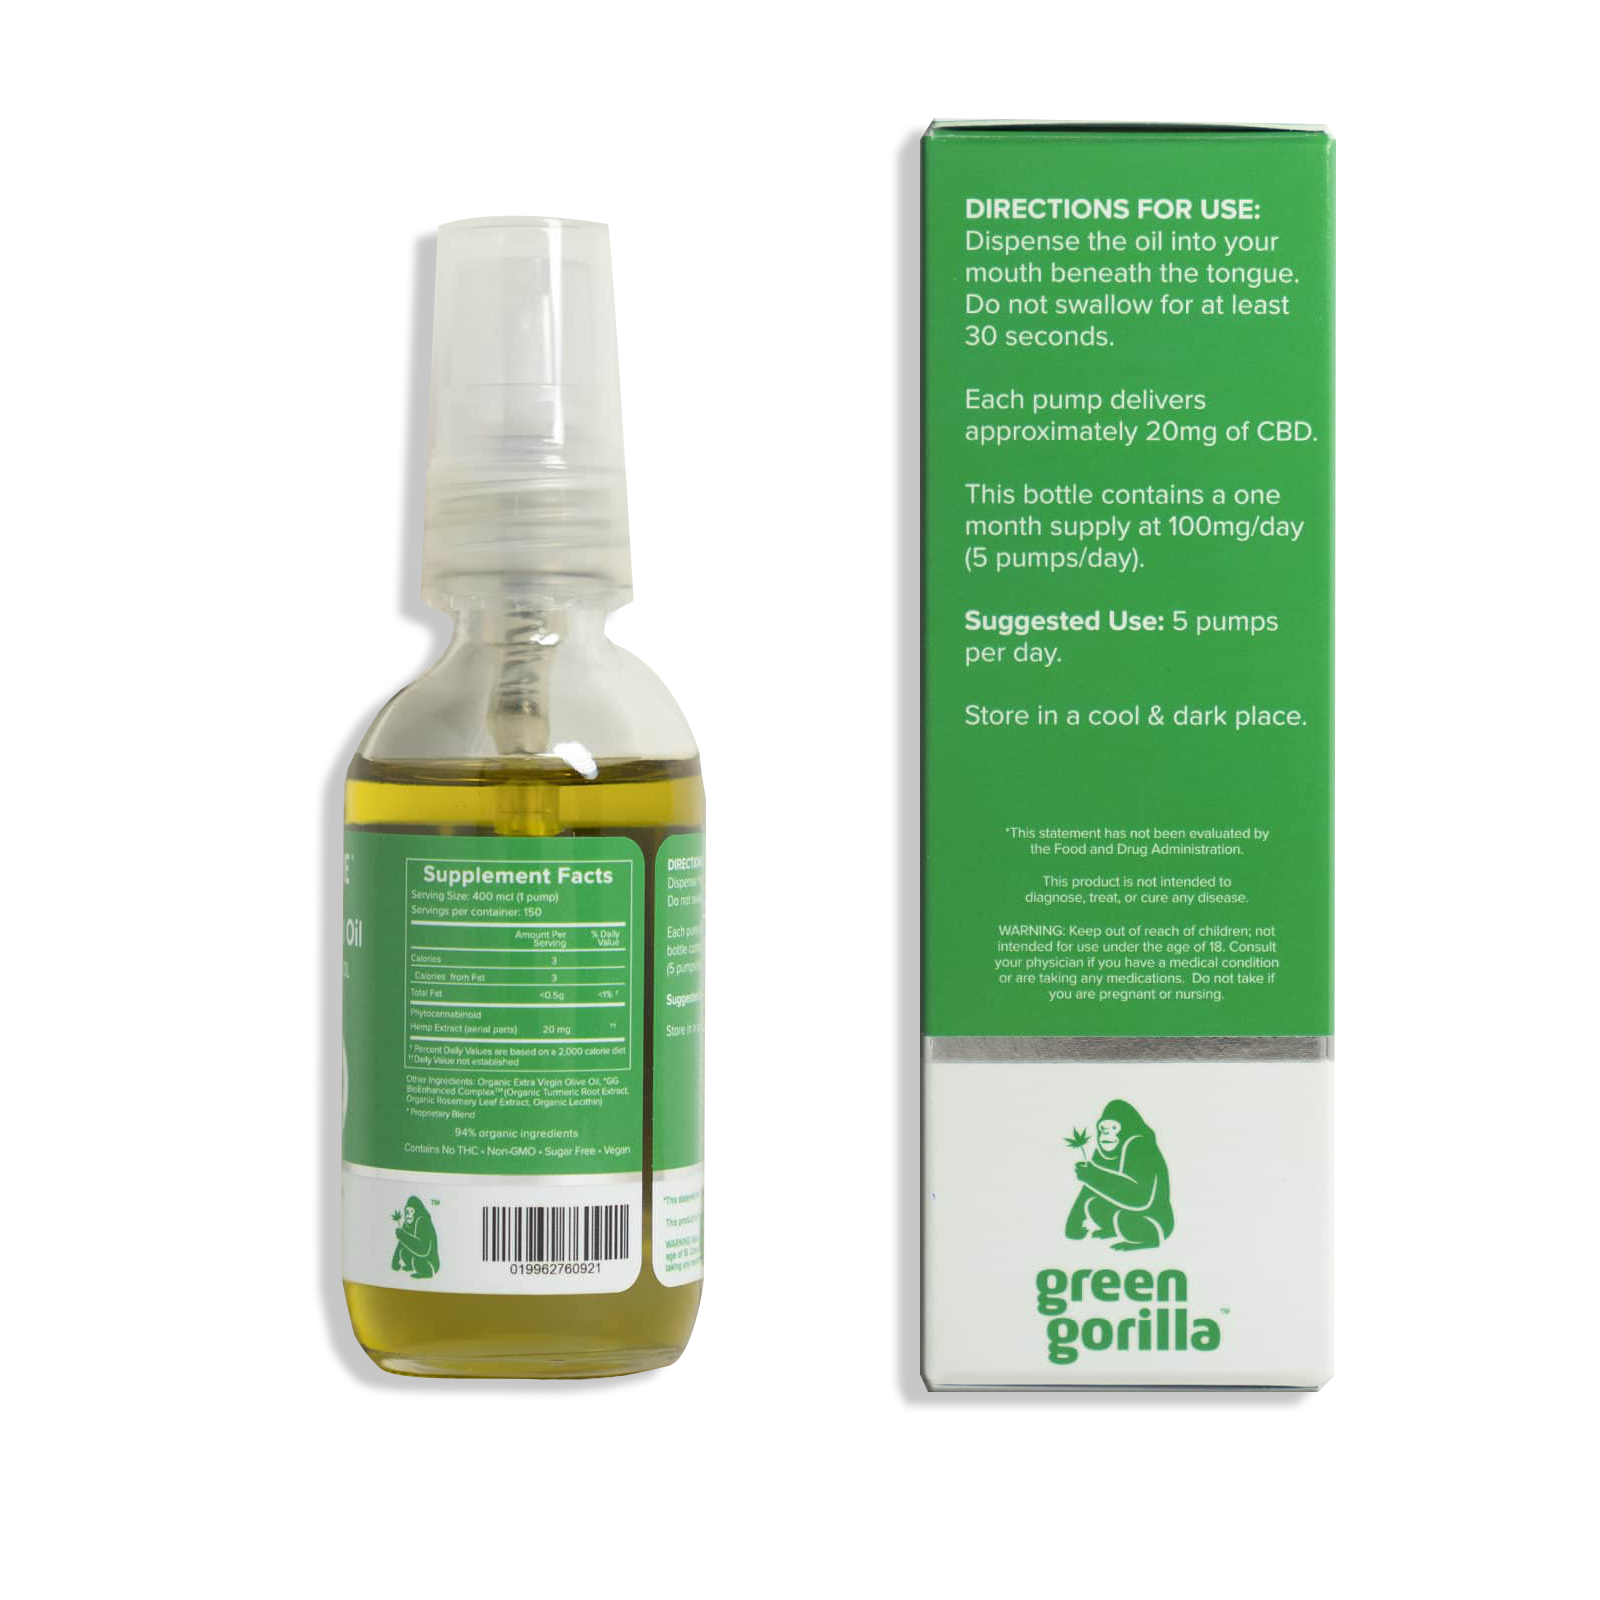 green gorilla royal cbd oil